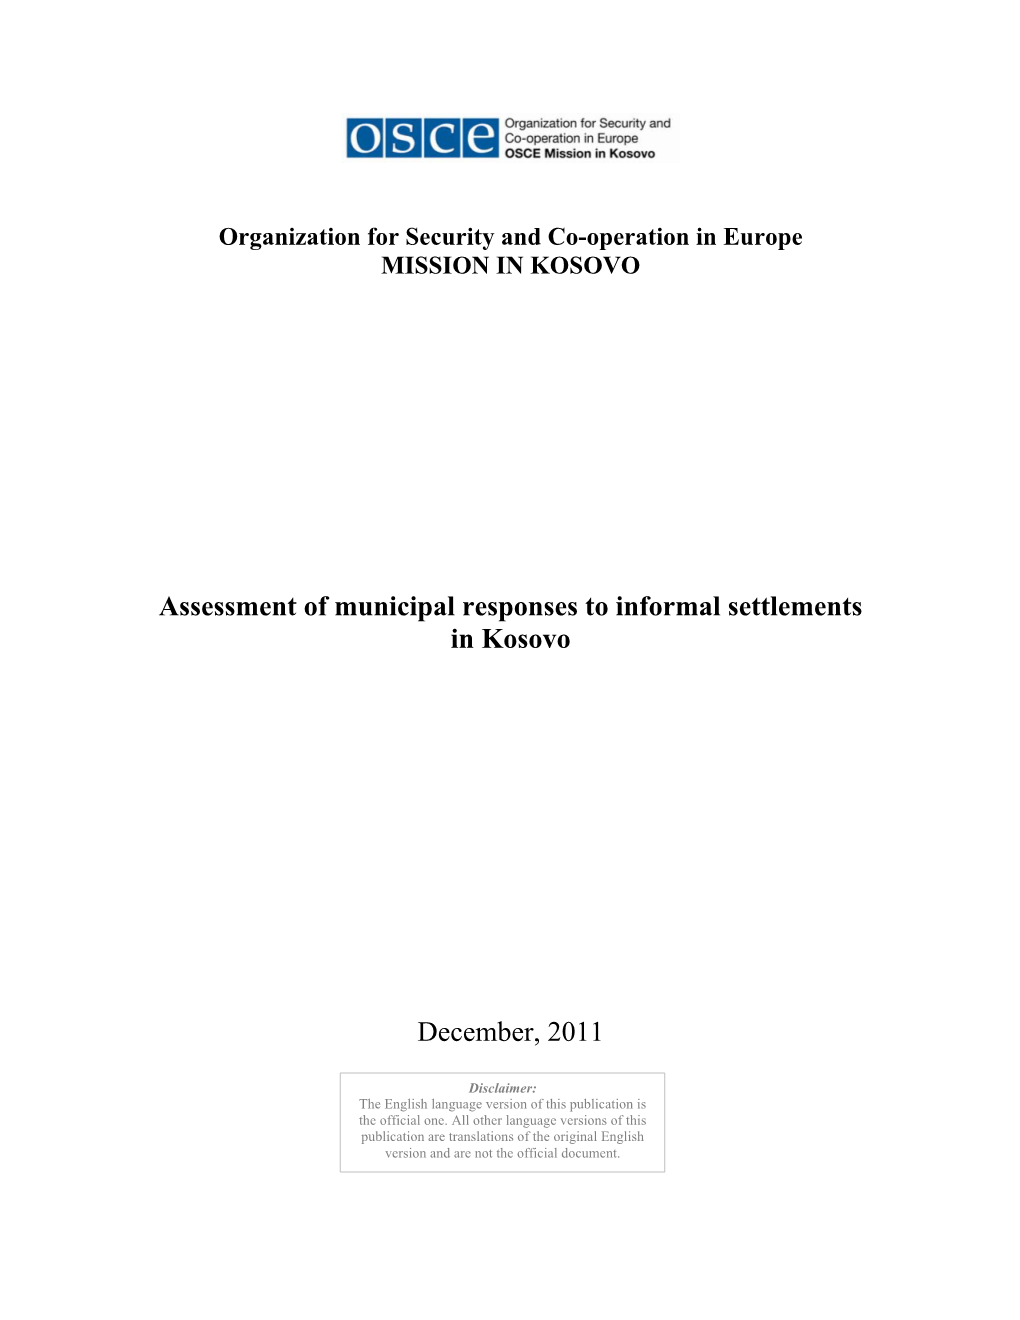 Assessment of Municipal Responses to Informal Settlements in Kosovo